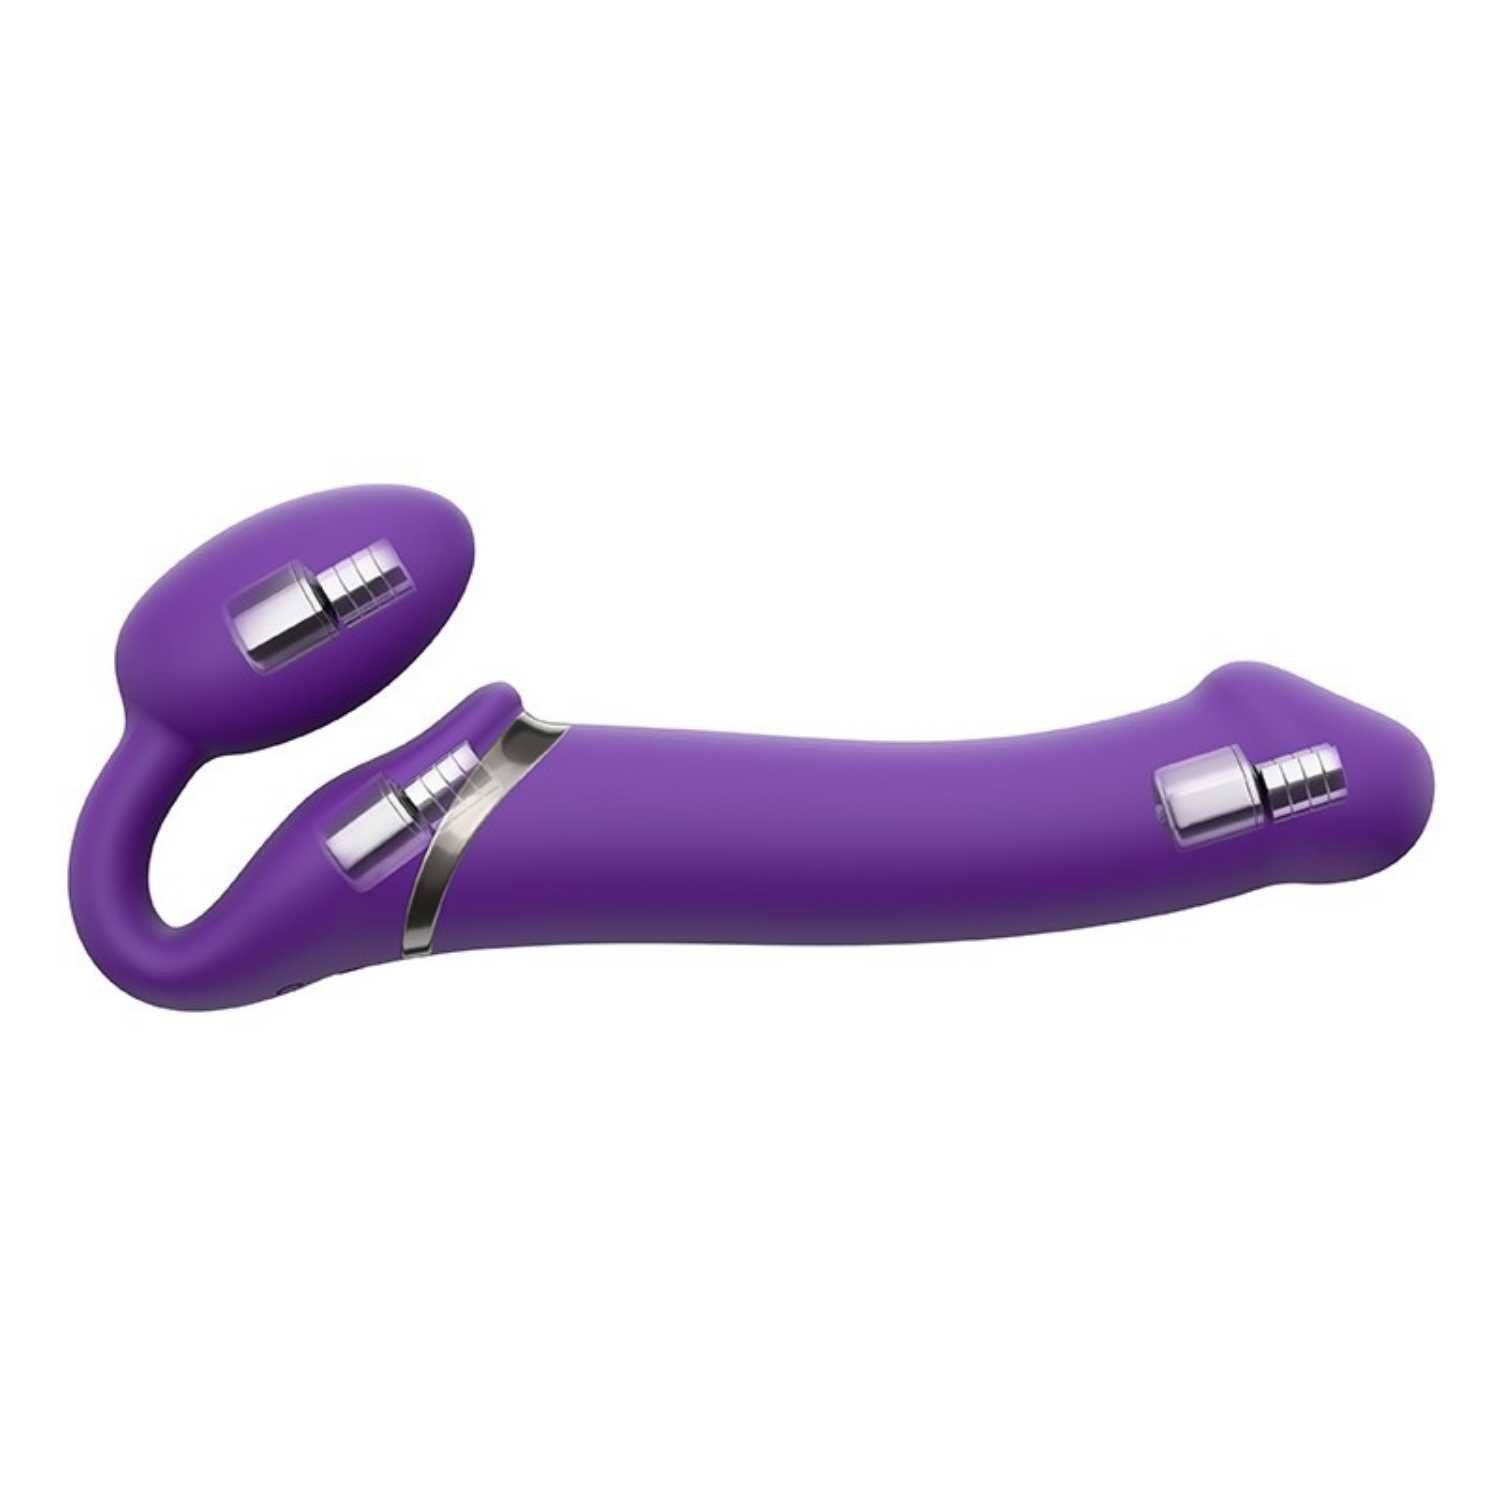 strap-on-me® Strap-on-Dildo XL Remote, violett Strapon Dildo Strapless